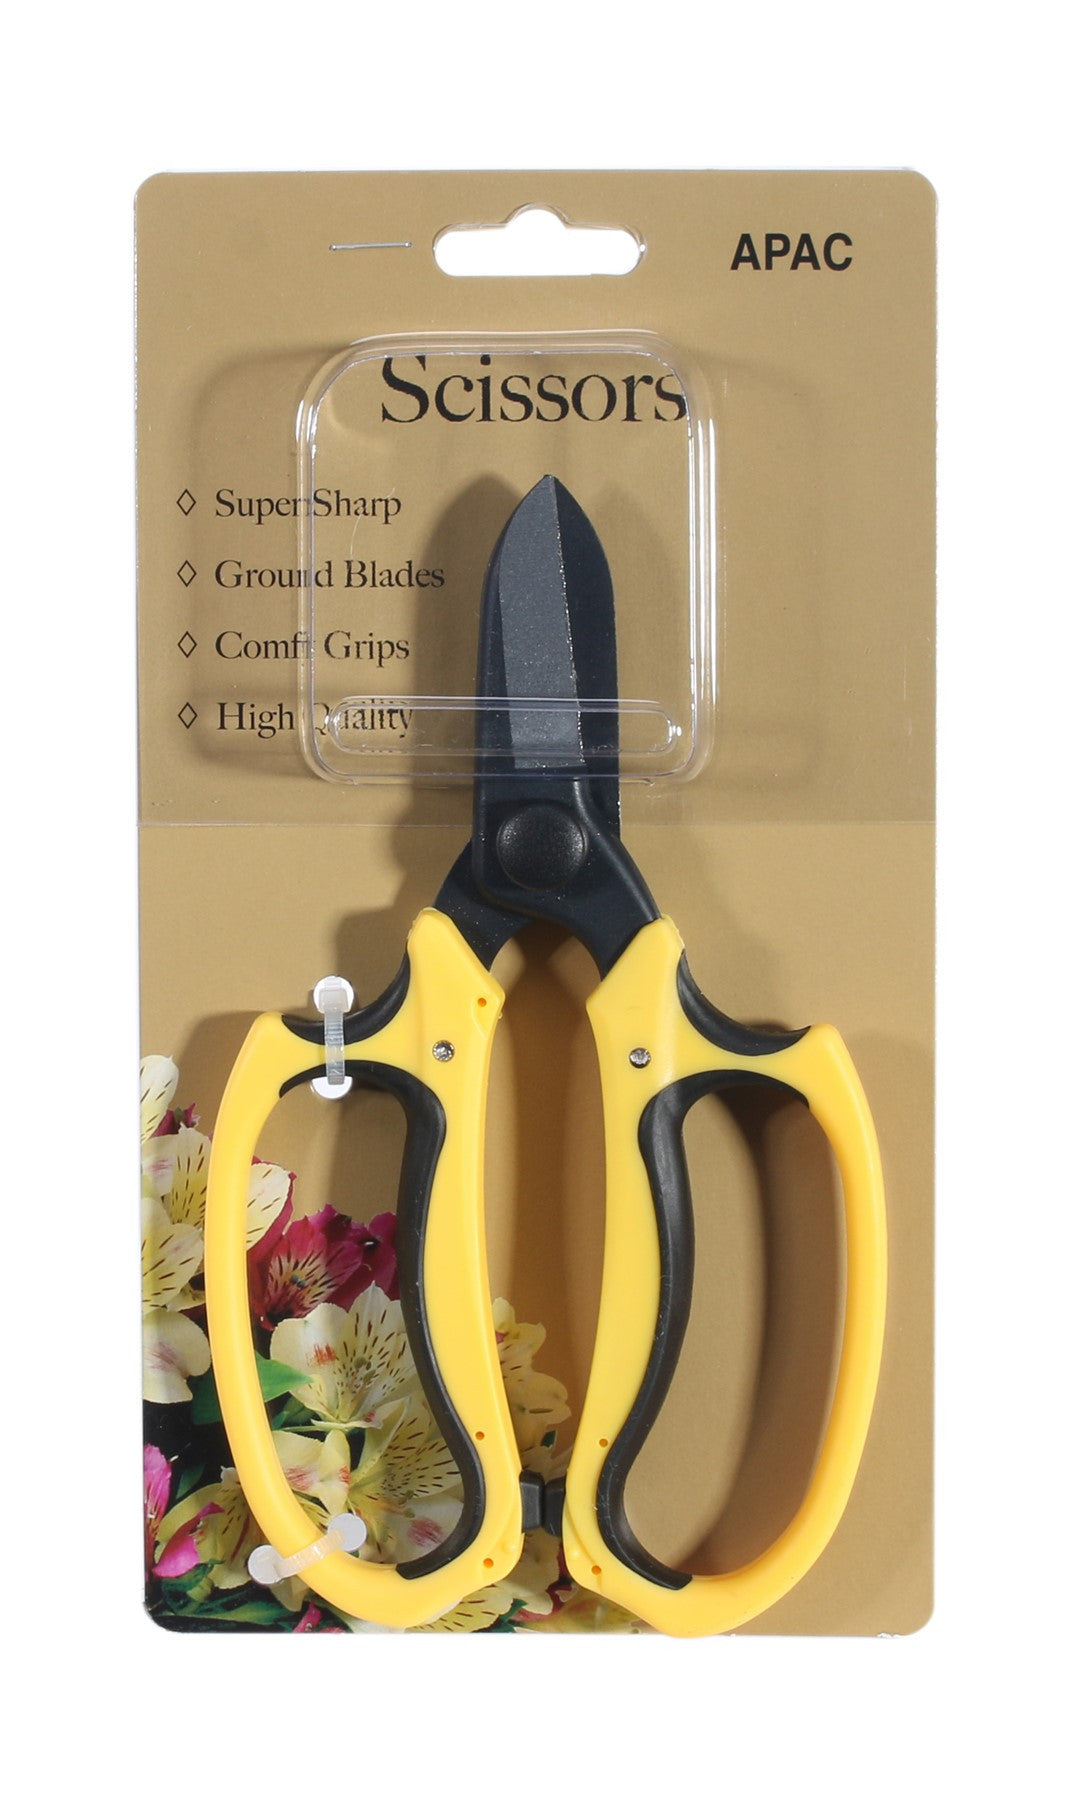 View YellowBlack Scissors information